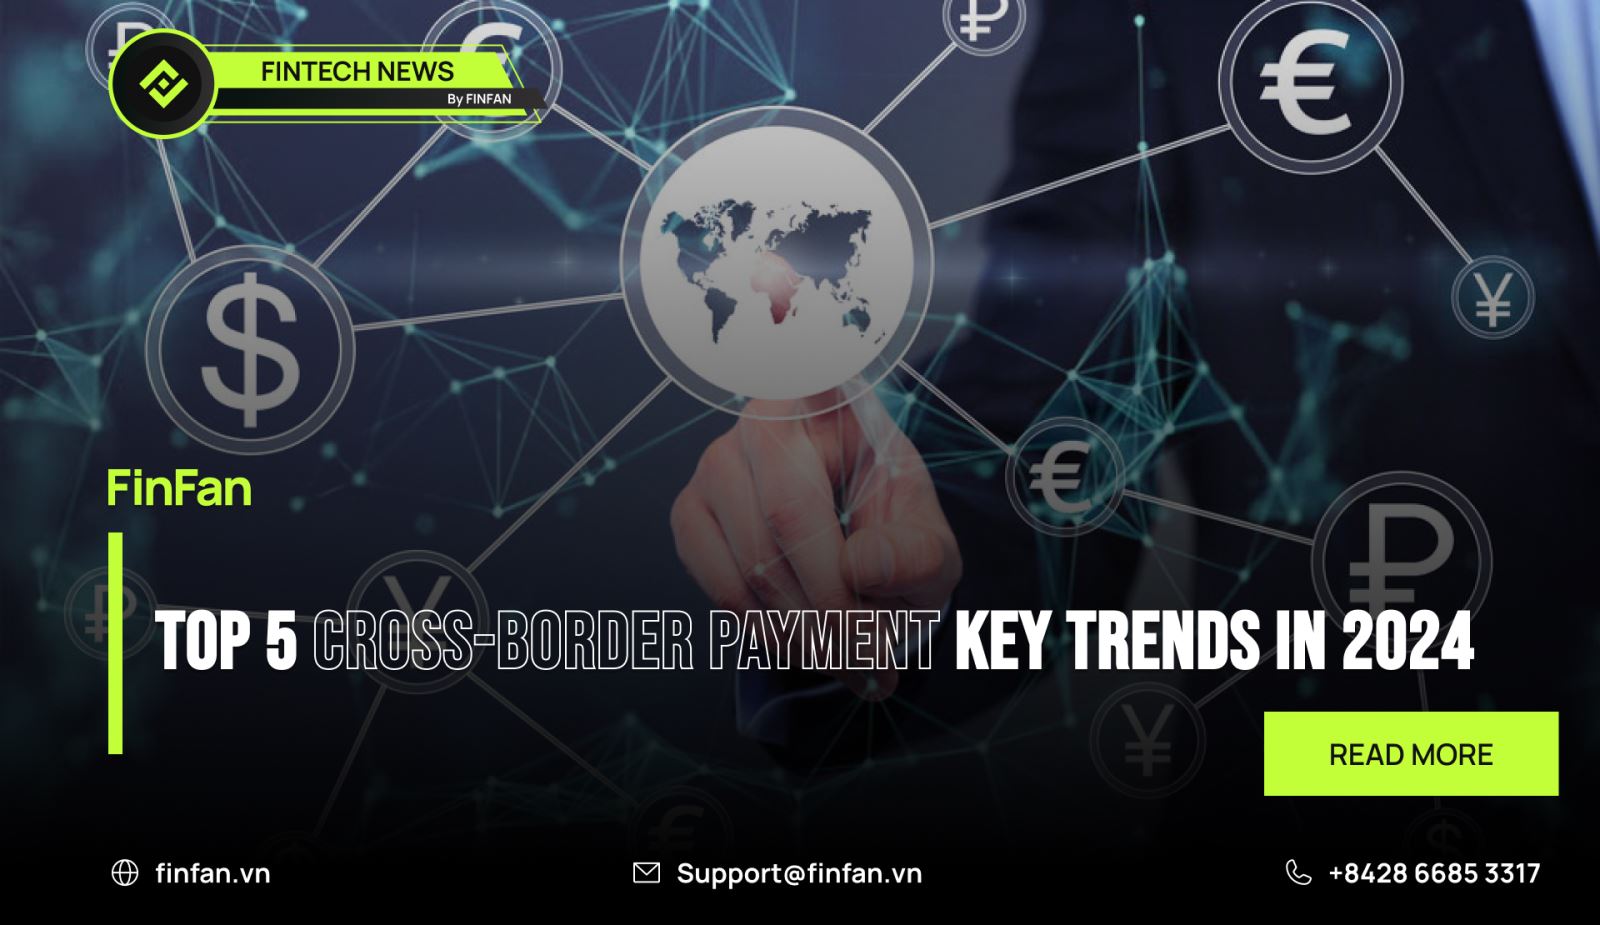 Top 5 Cross-border Payment Key Trends in 2024